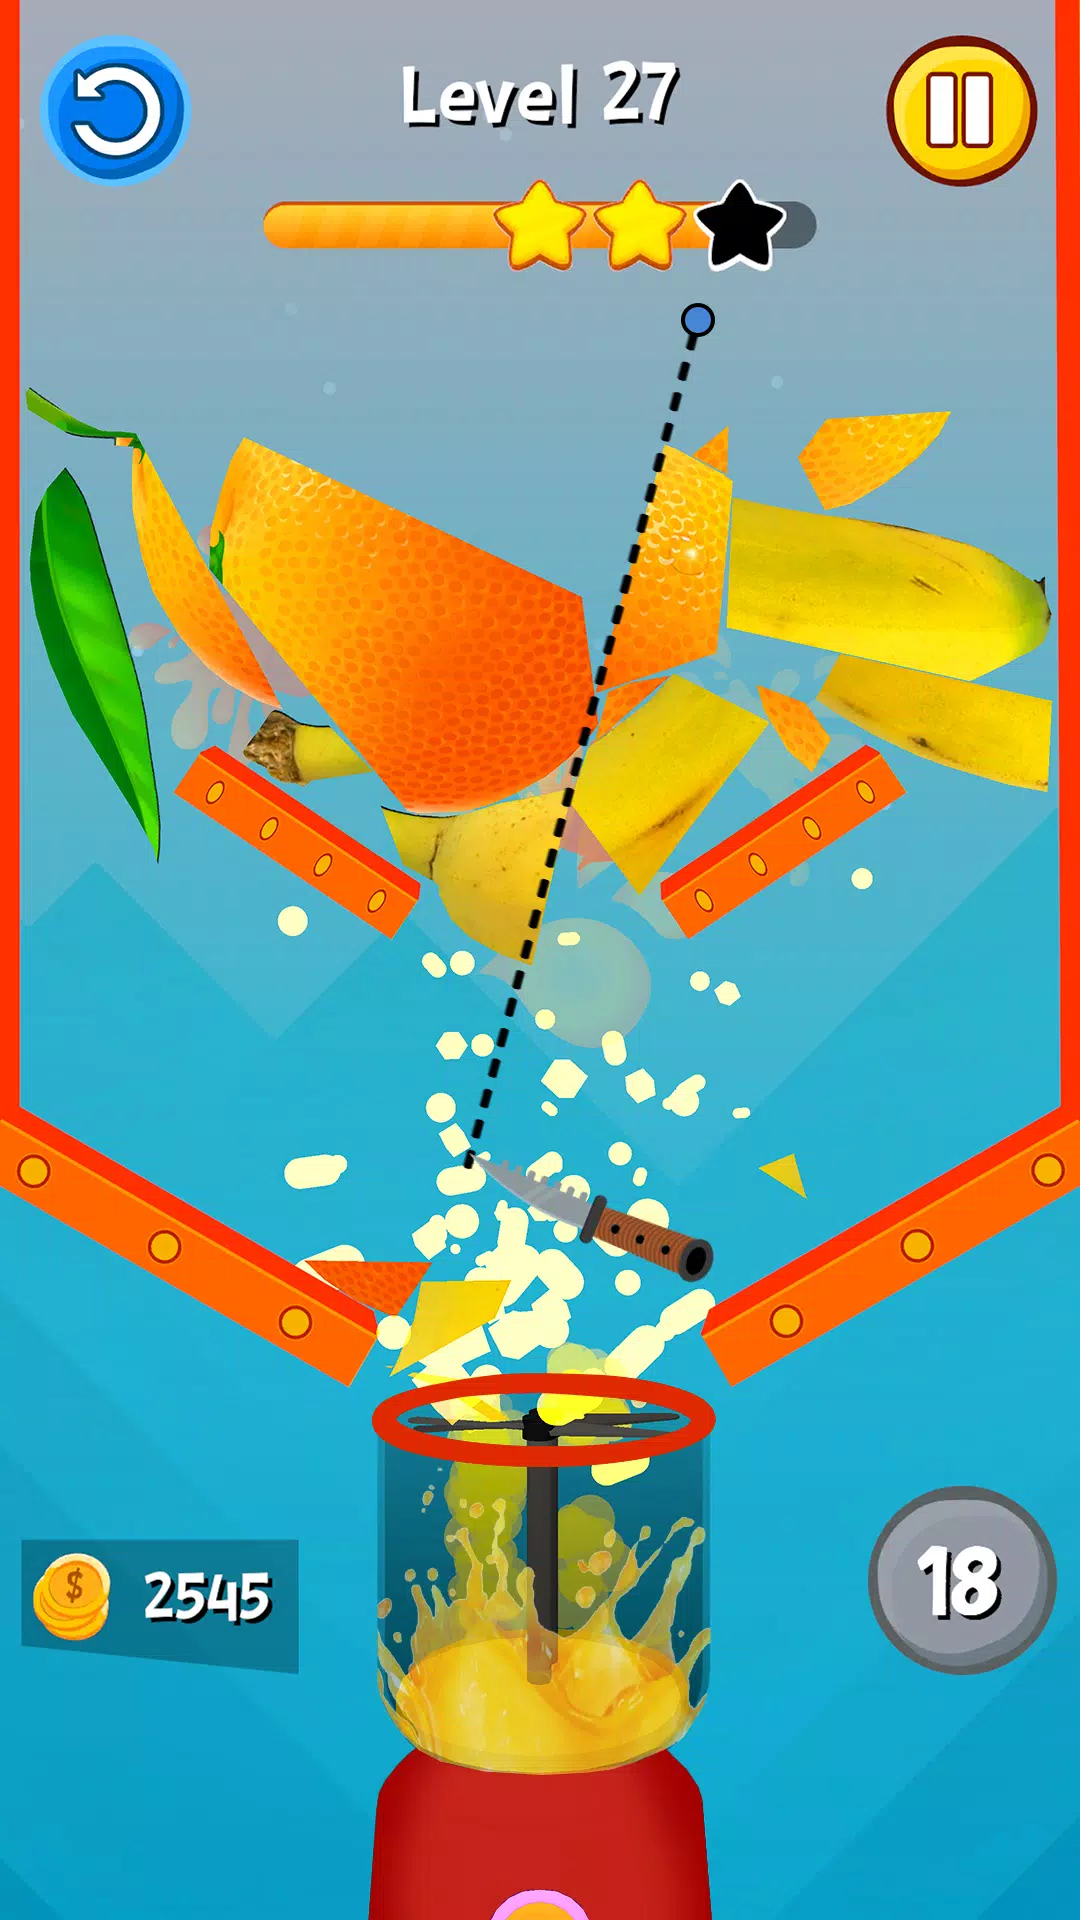 DOWNLOAD NOW : Crazy Juice Fruit Master Games